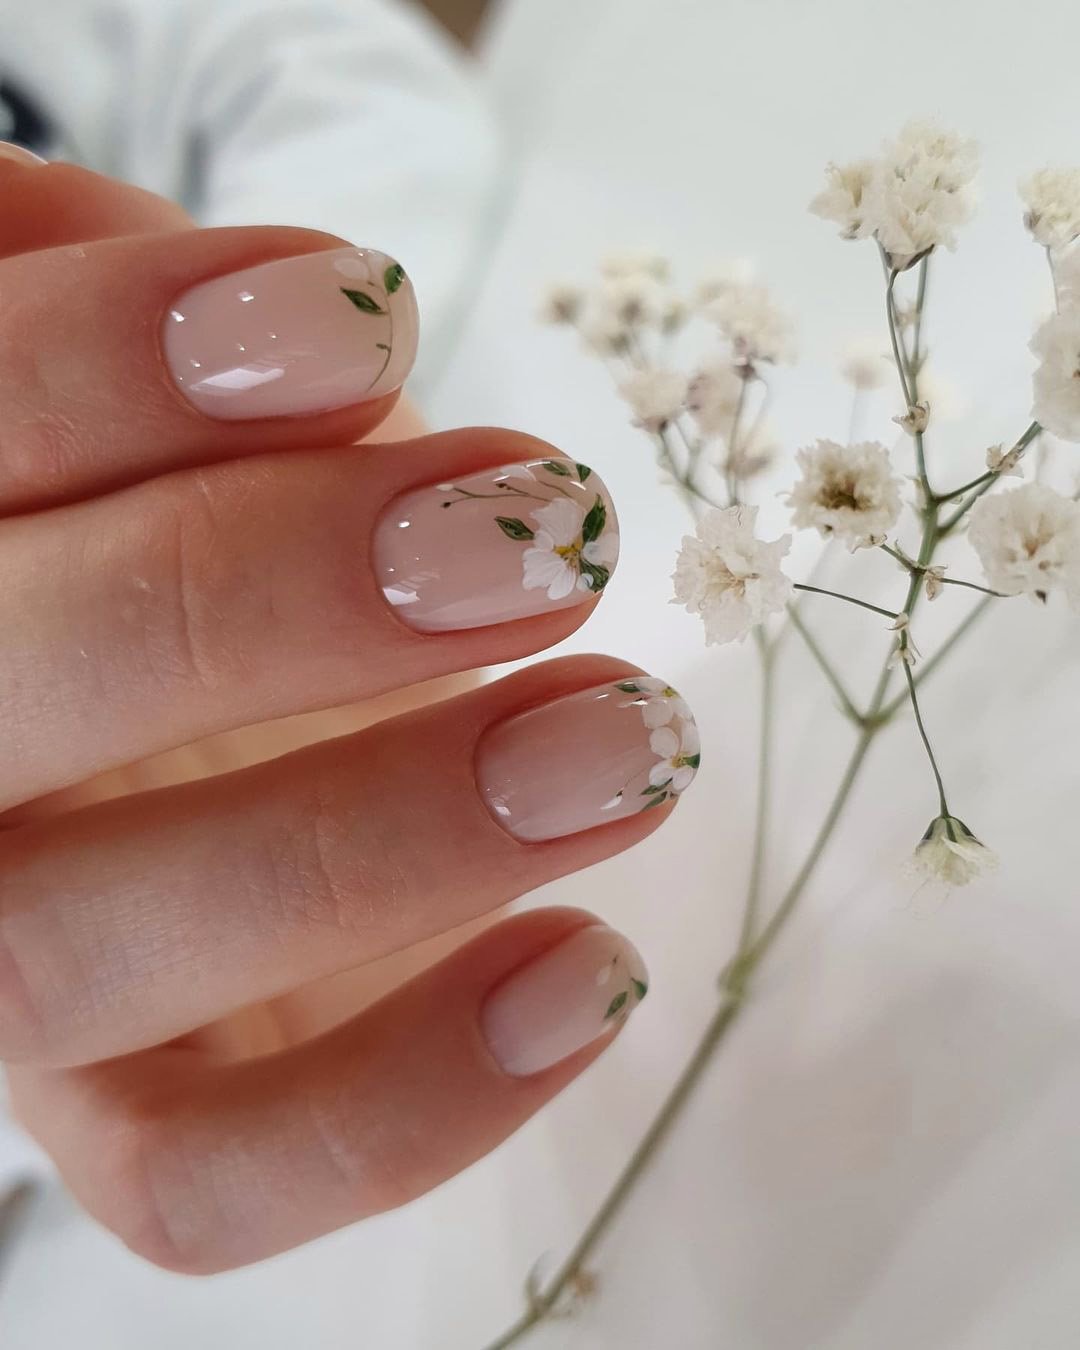 nail design wedding idea nude with white flowers kangannynails